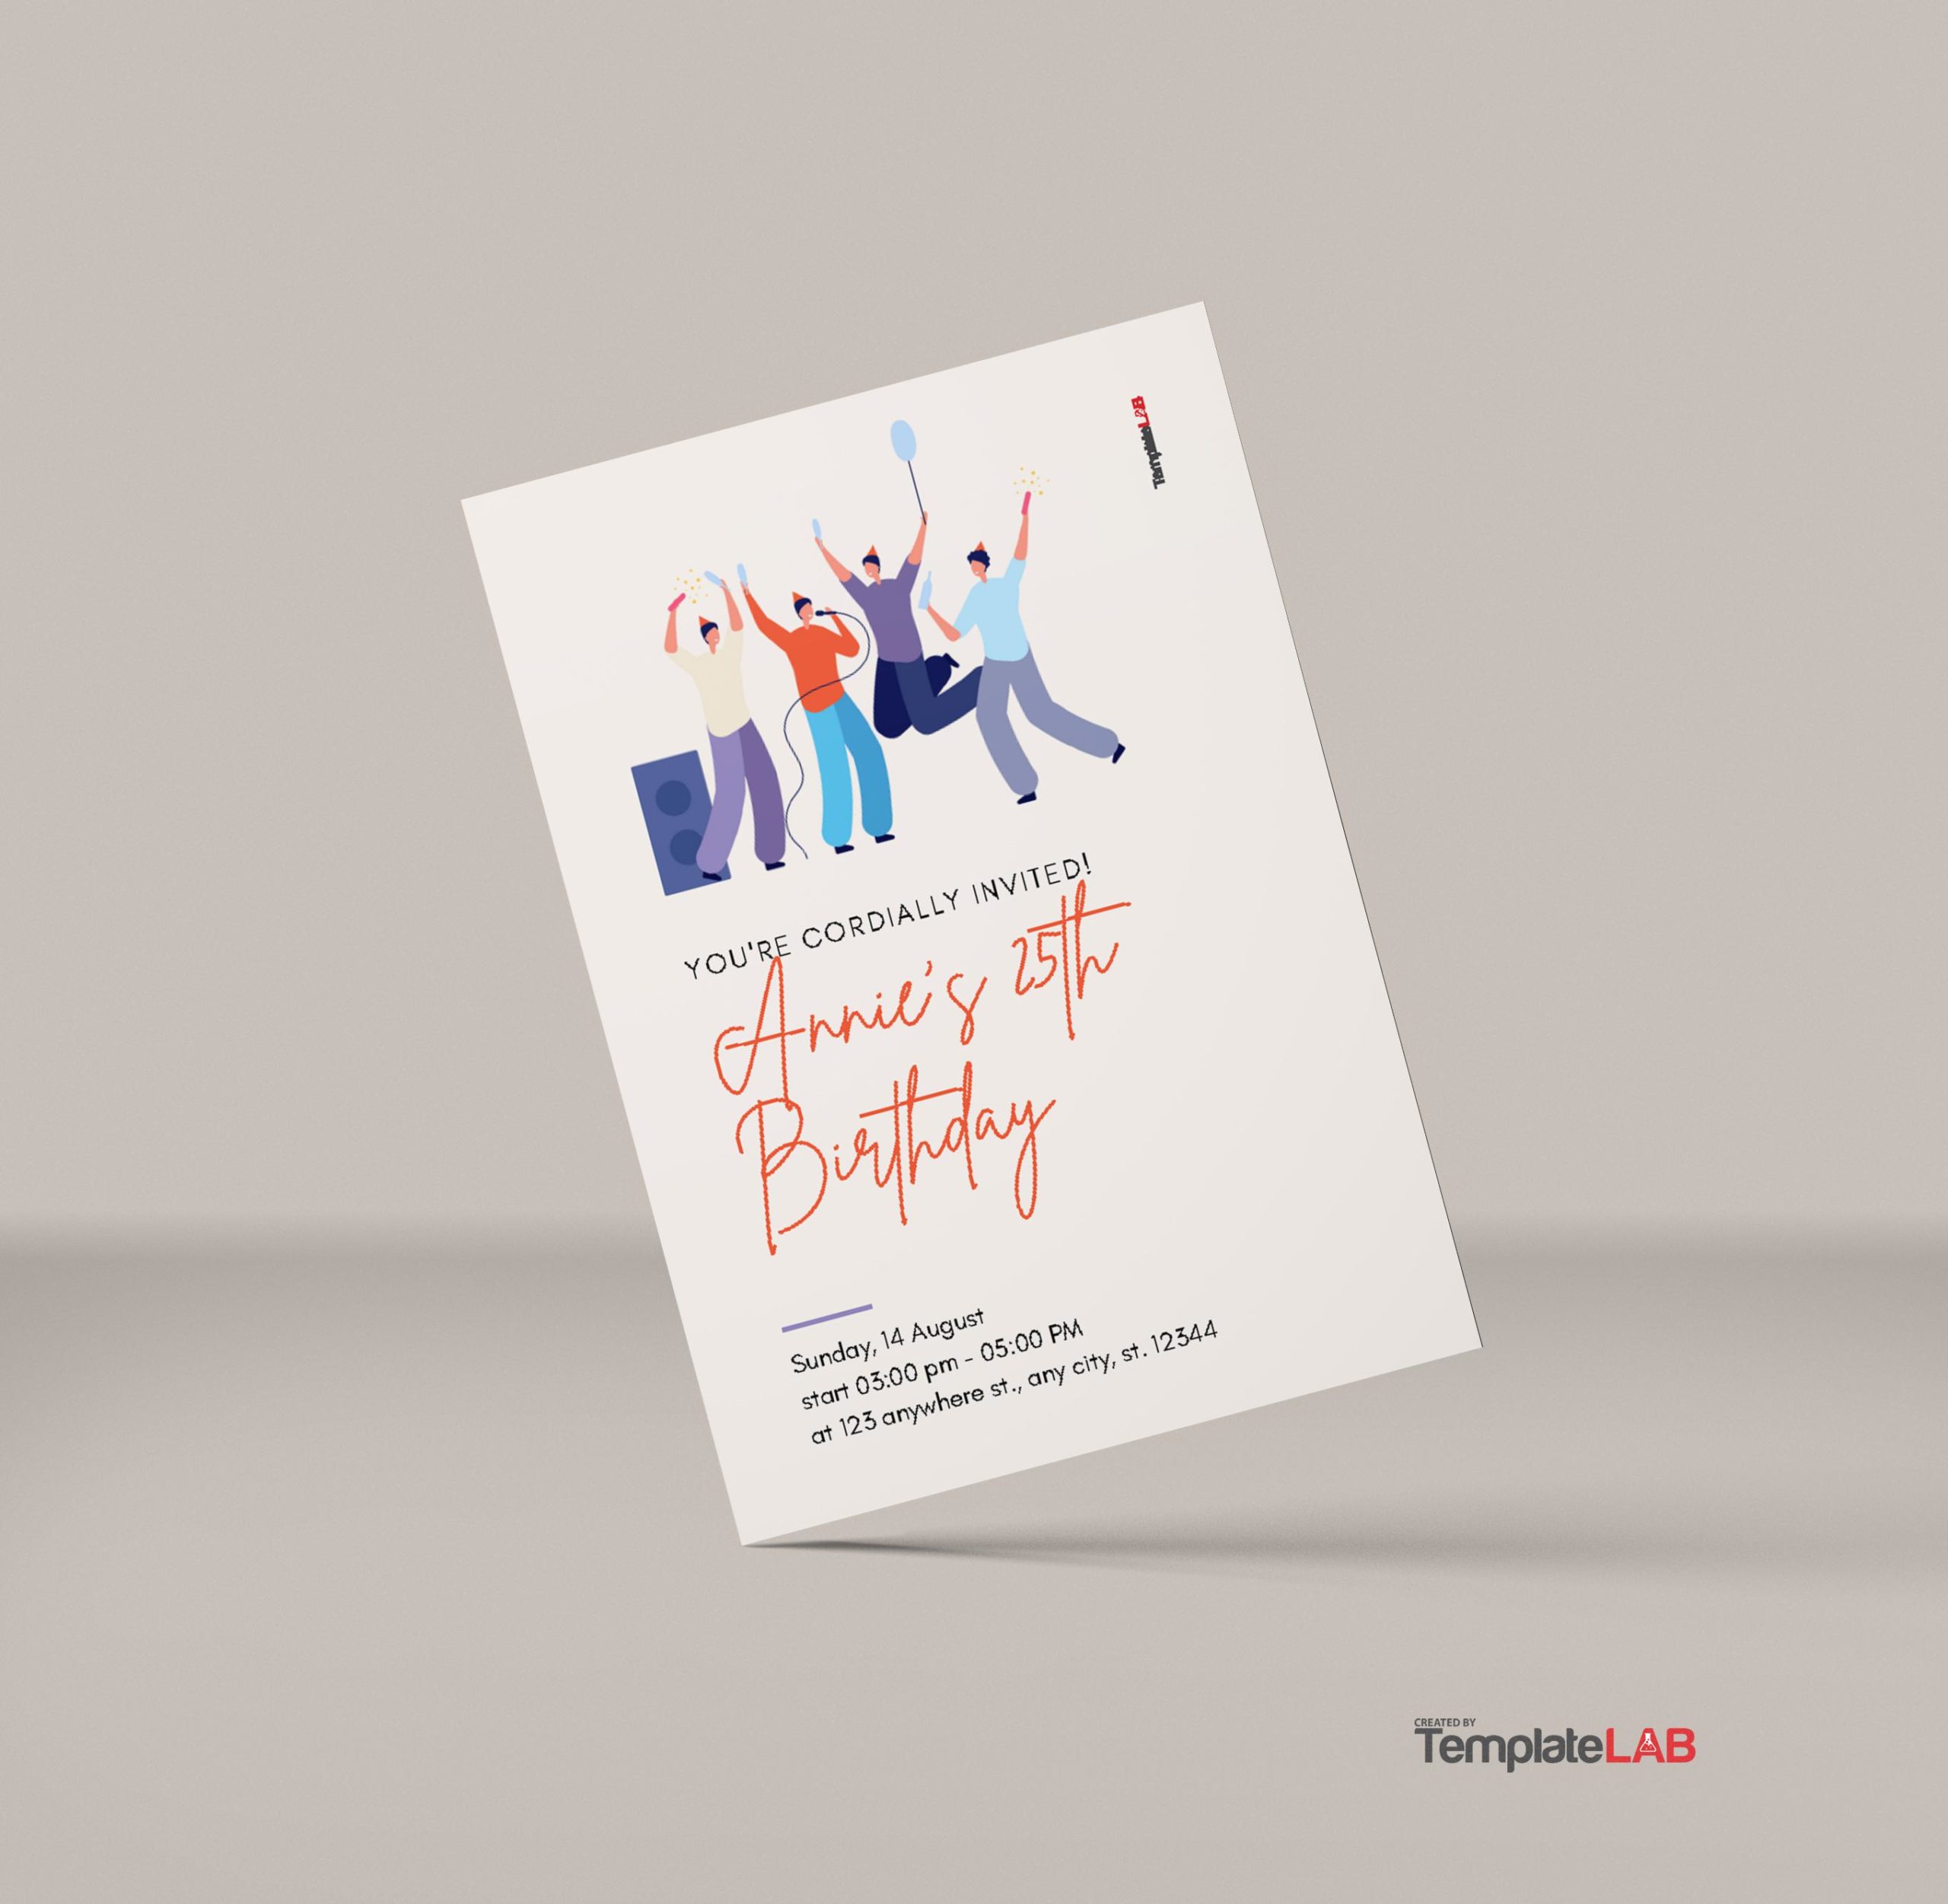 18 Printable Birthday Card Templates [FREE] ᐅ TemplateLab